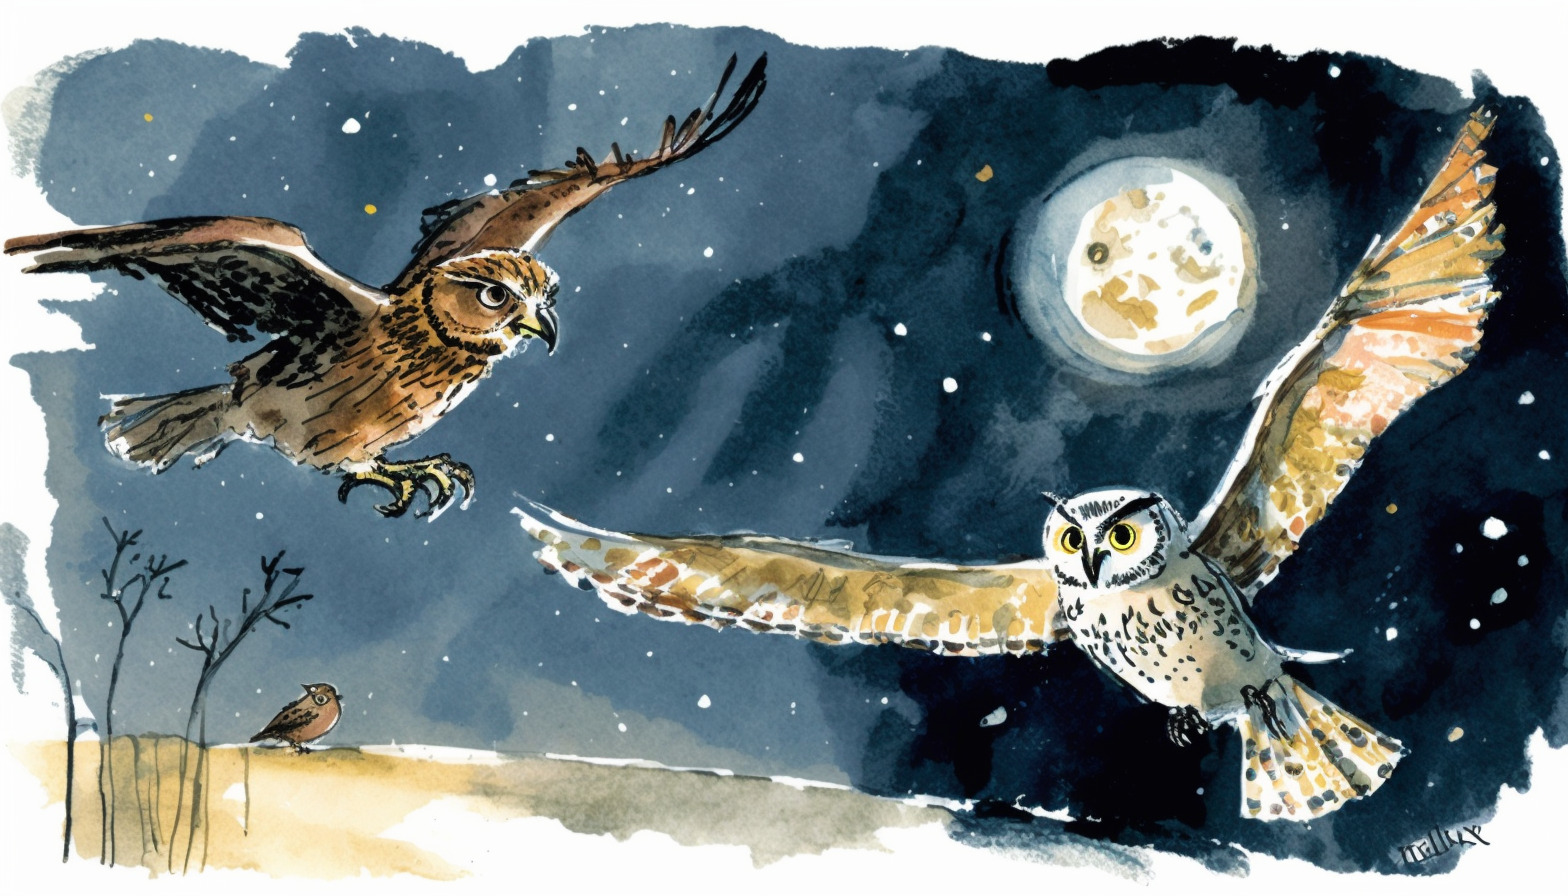 Illustration of a kestrel and owl flying at night